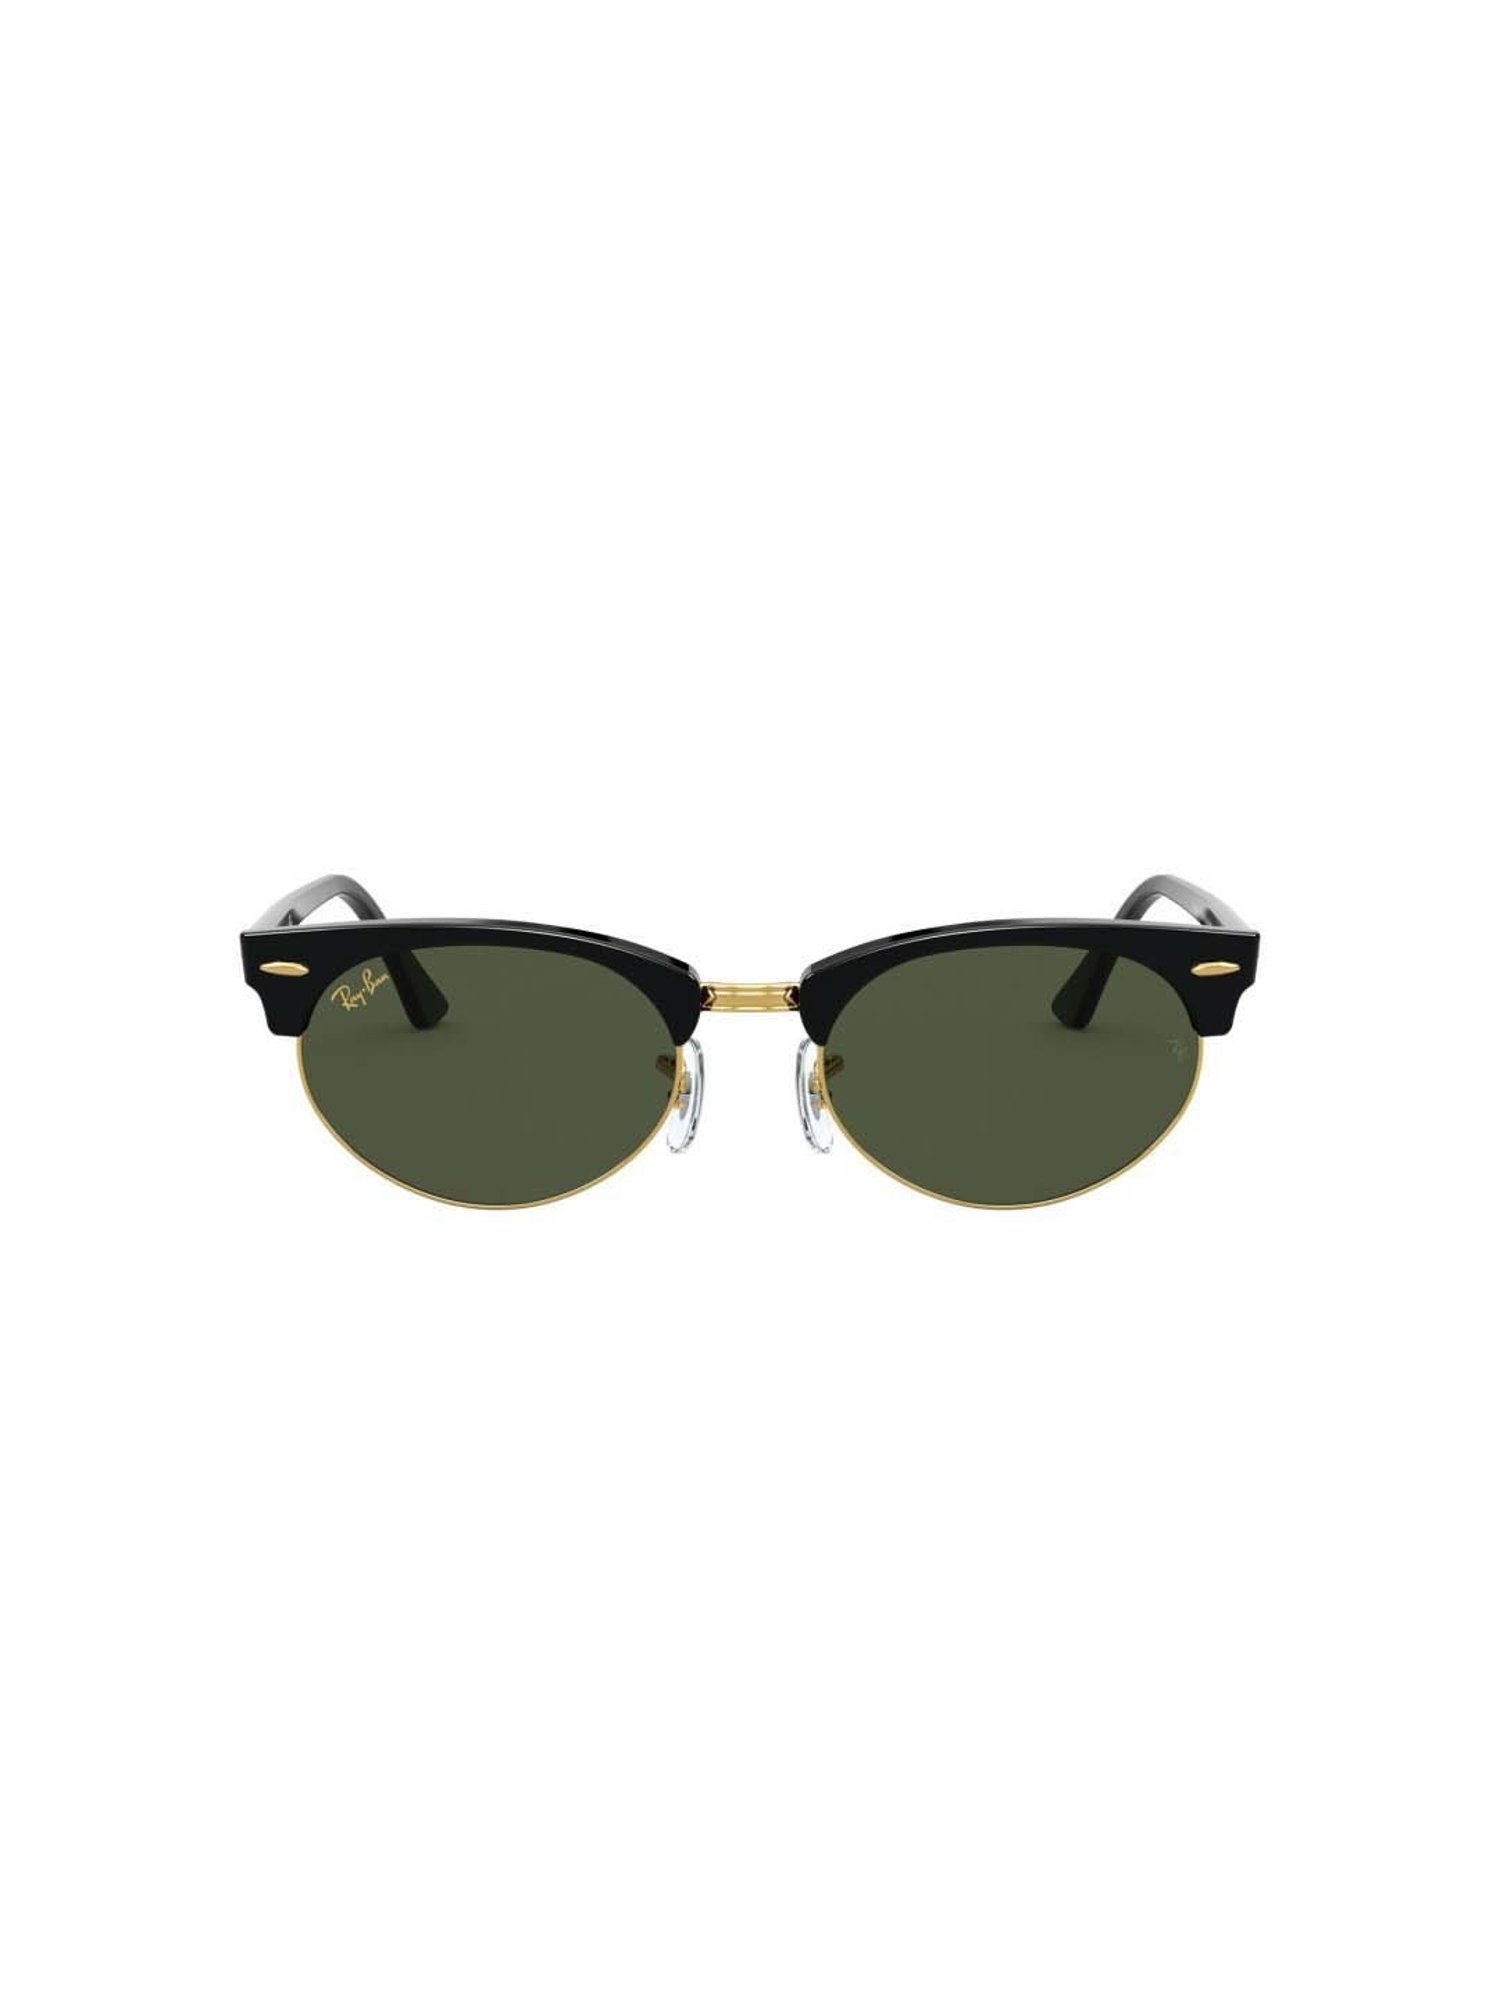 14 Randolph Aviator Sunglasses Bayonet temples 52mm | eBay